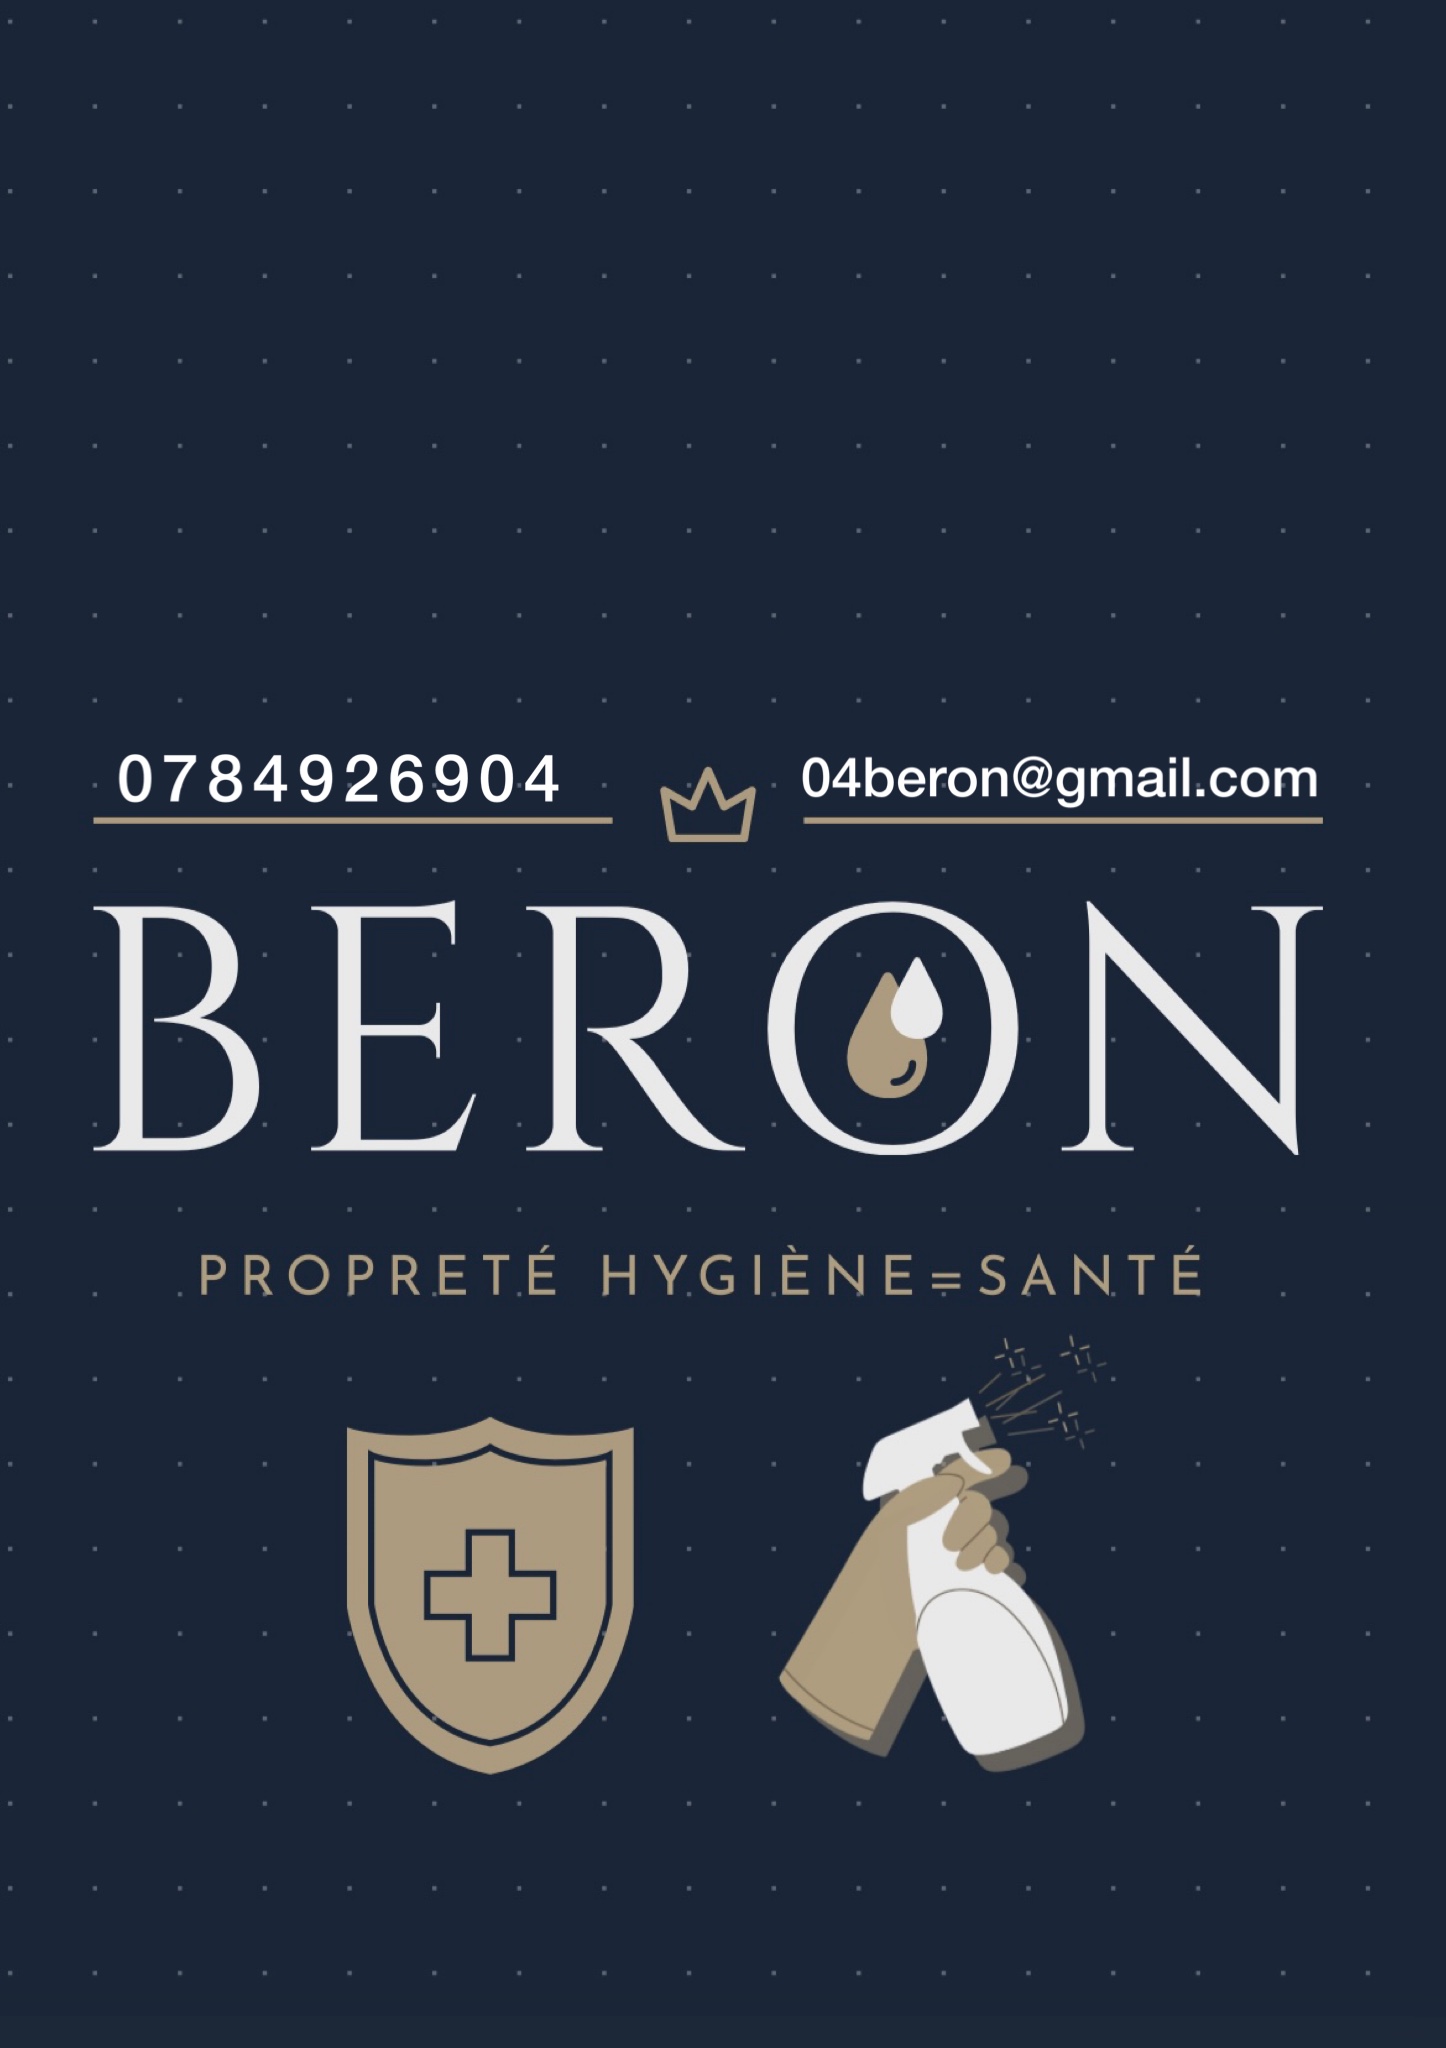 Société Beron propreté hygiène = sante